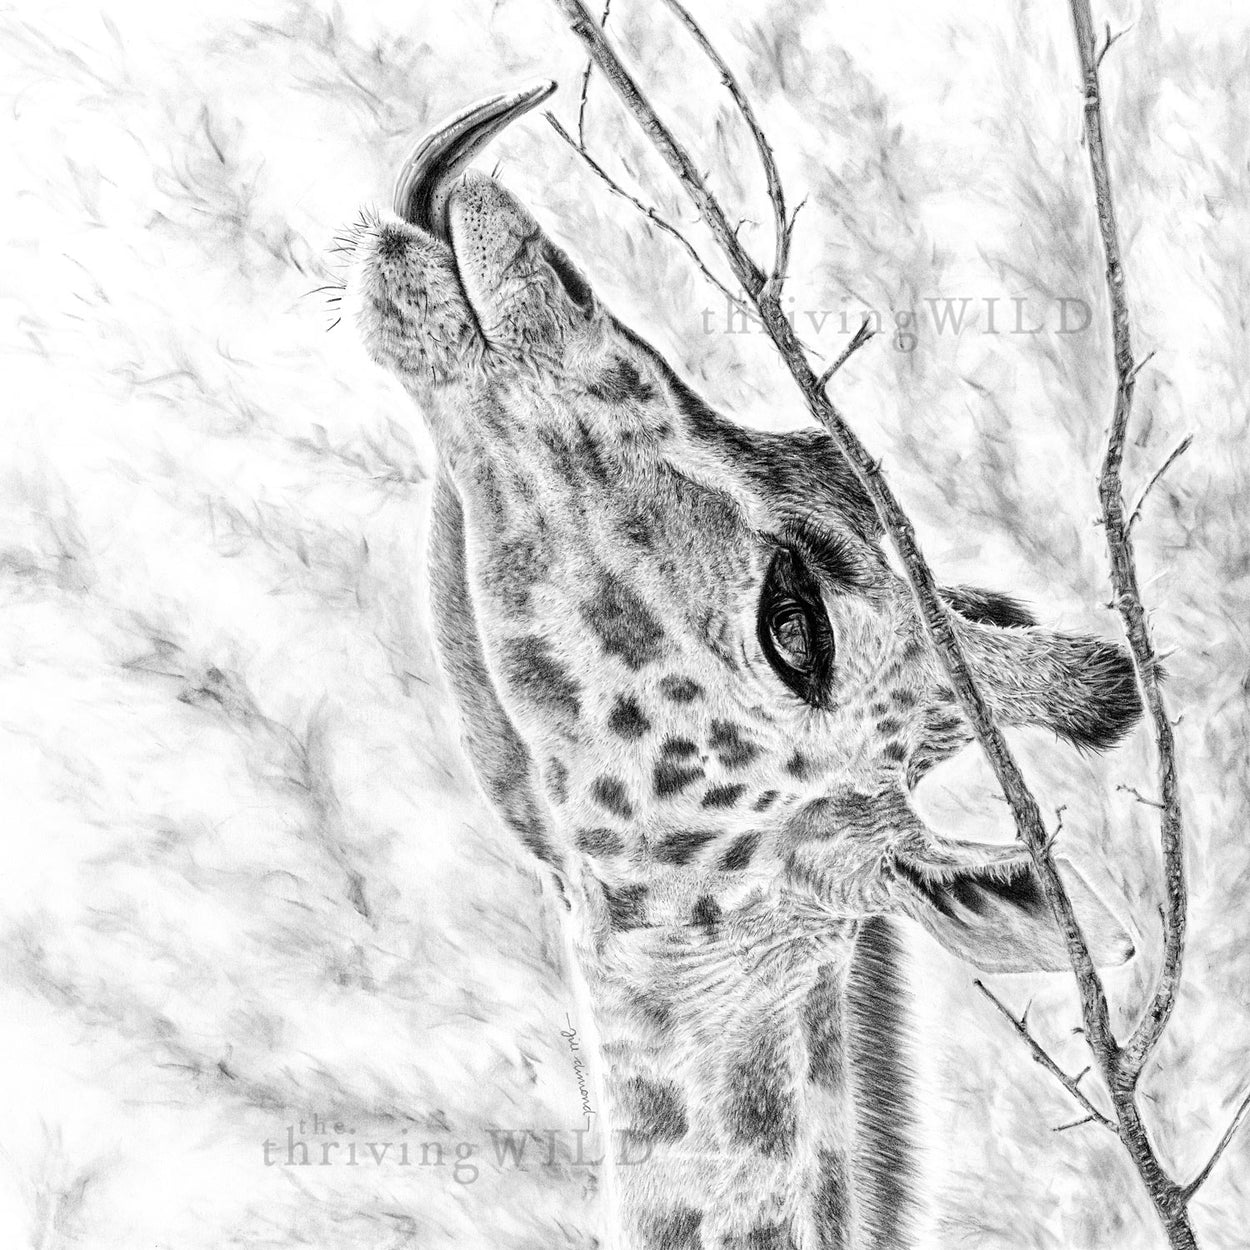 Giraffe Wall Art Drawing - The Thriving Wild